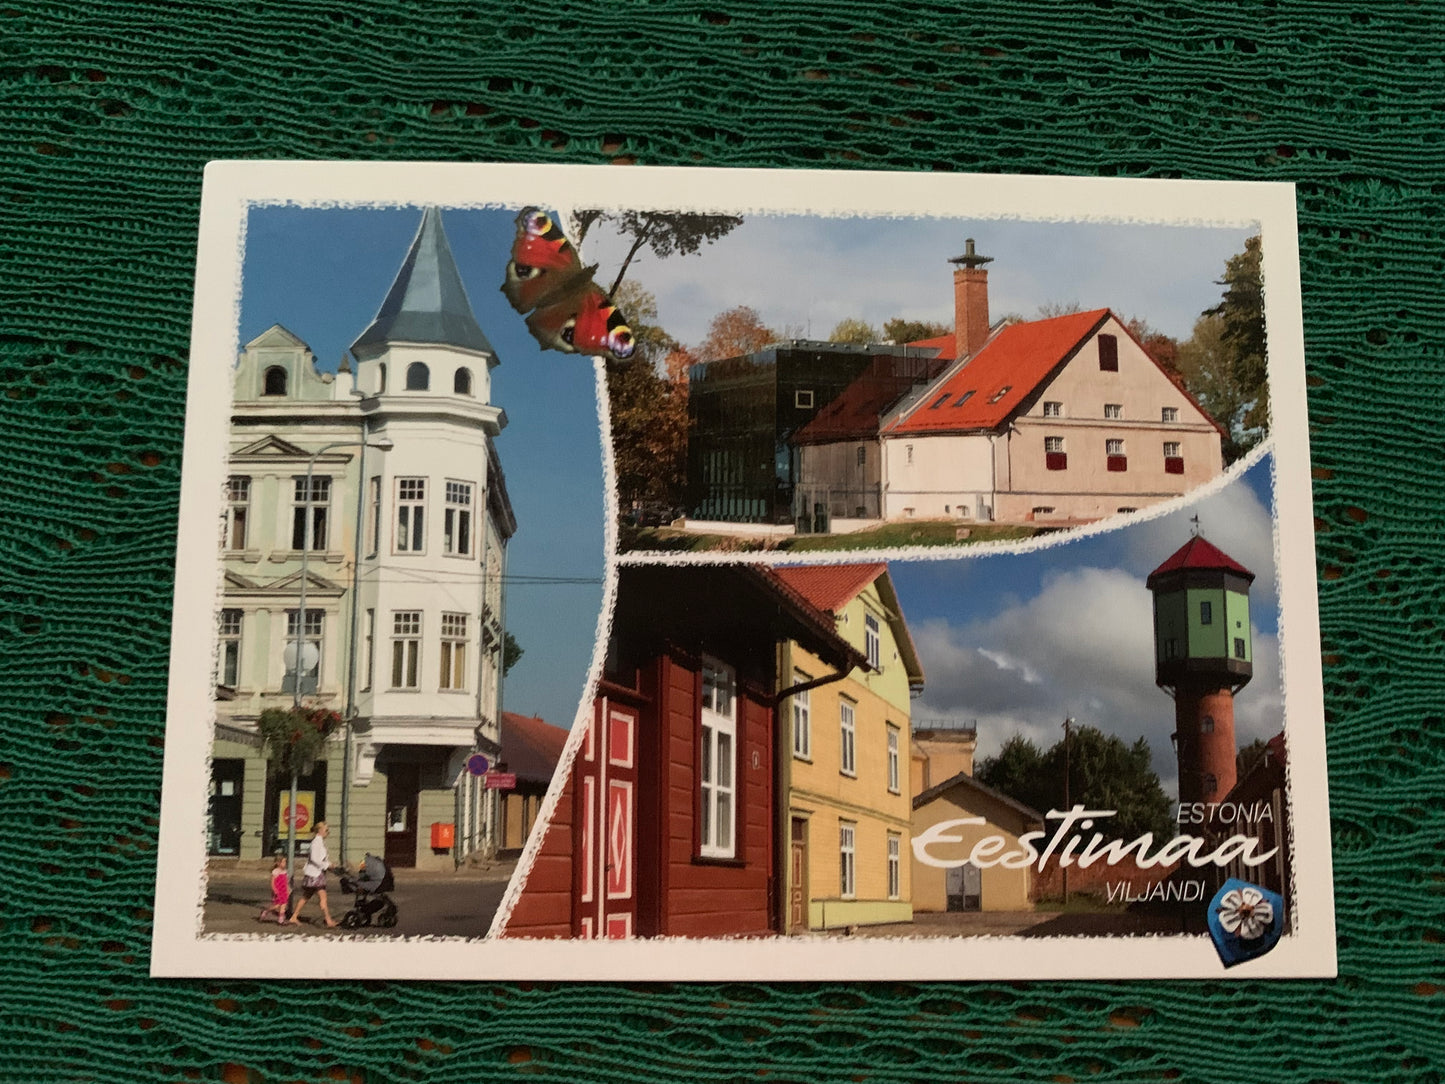 ESTONIA postcard for collecting or post crossing - Views of Viljandi town - 2000's - unused